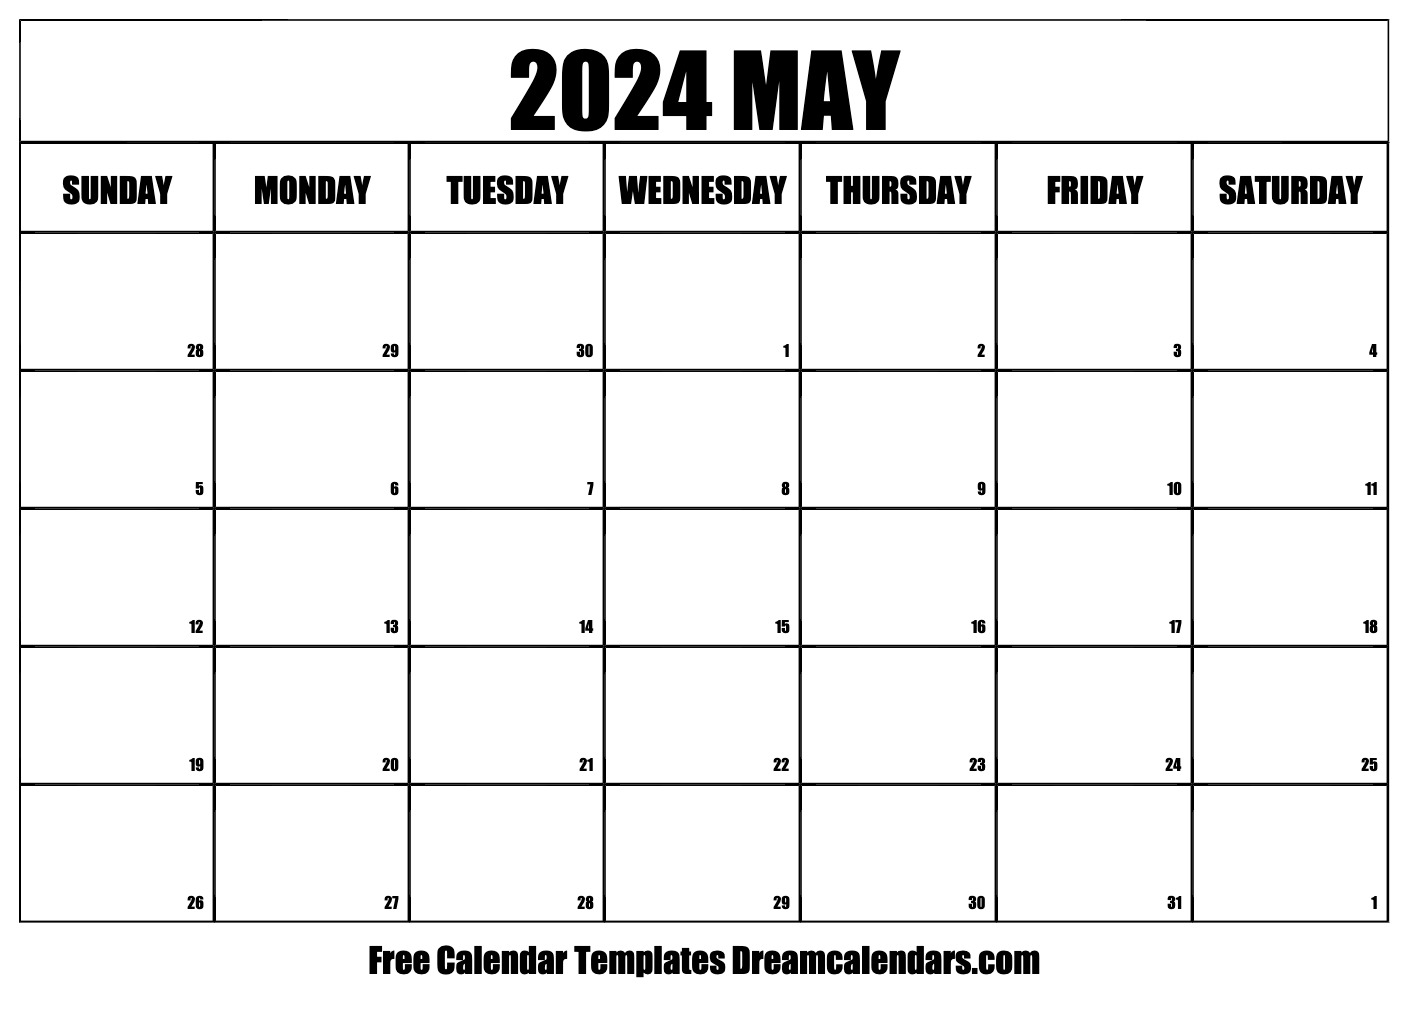 2024 May Calendar Template Calendar 2024